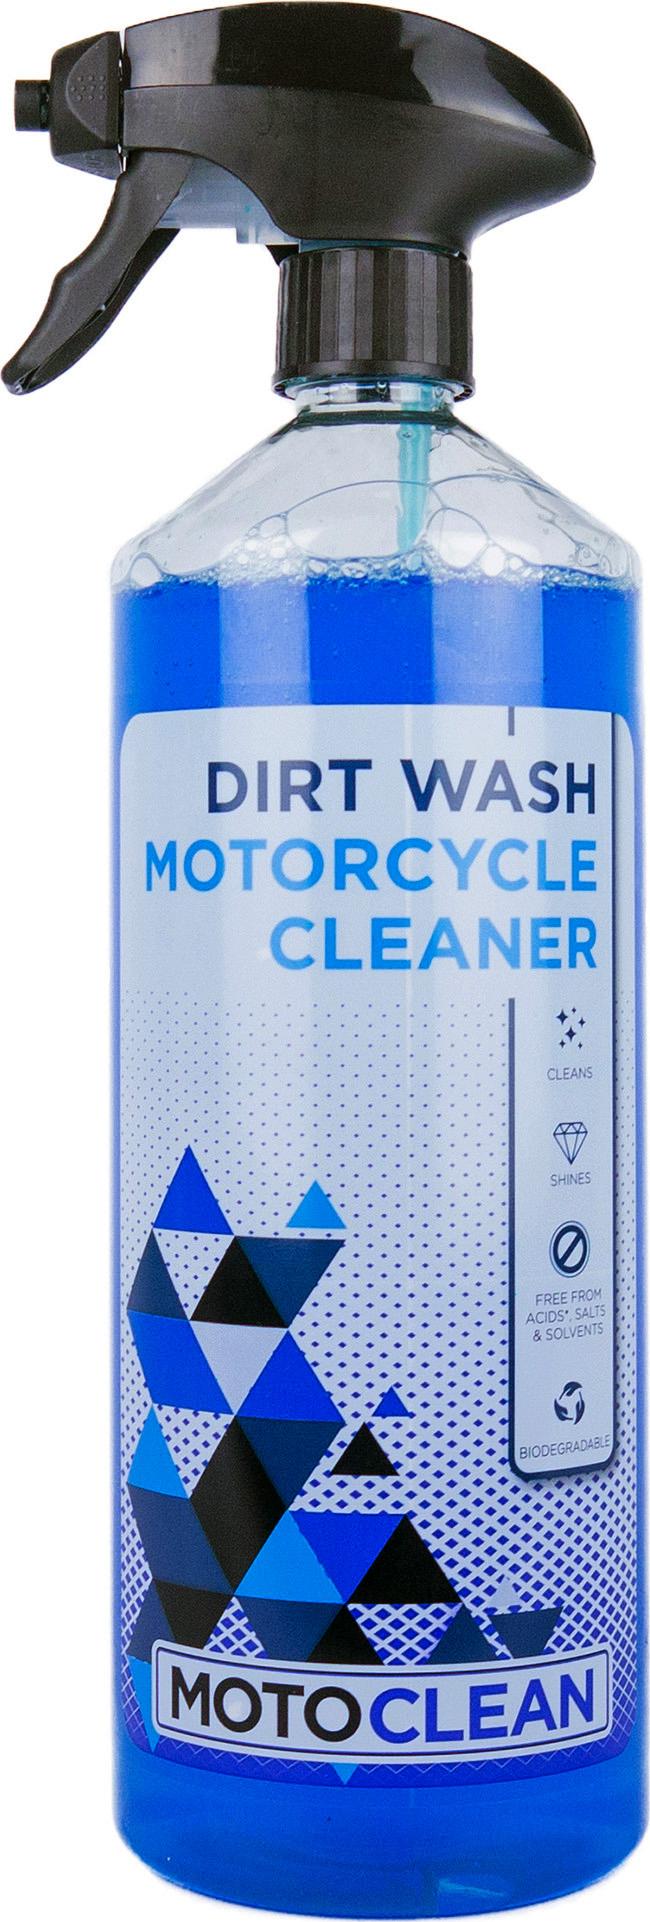 Motoclean Dirt Wash Motorcycle Cleaner, 1L